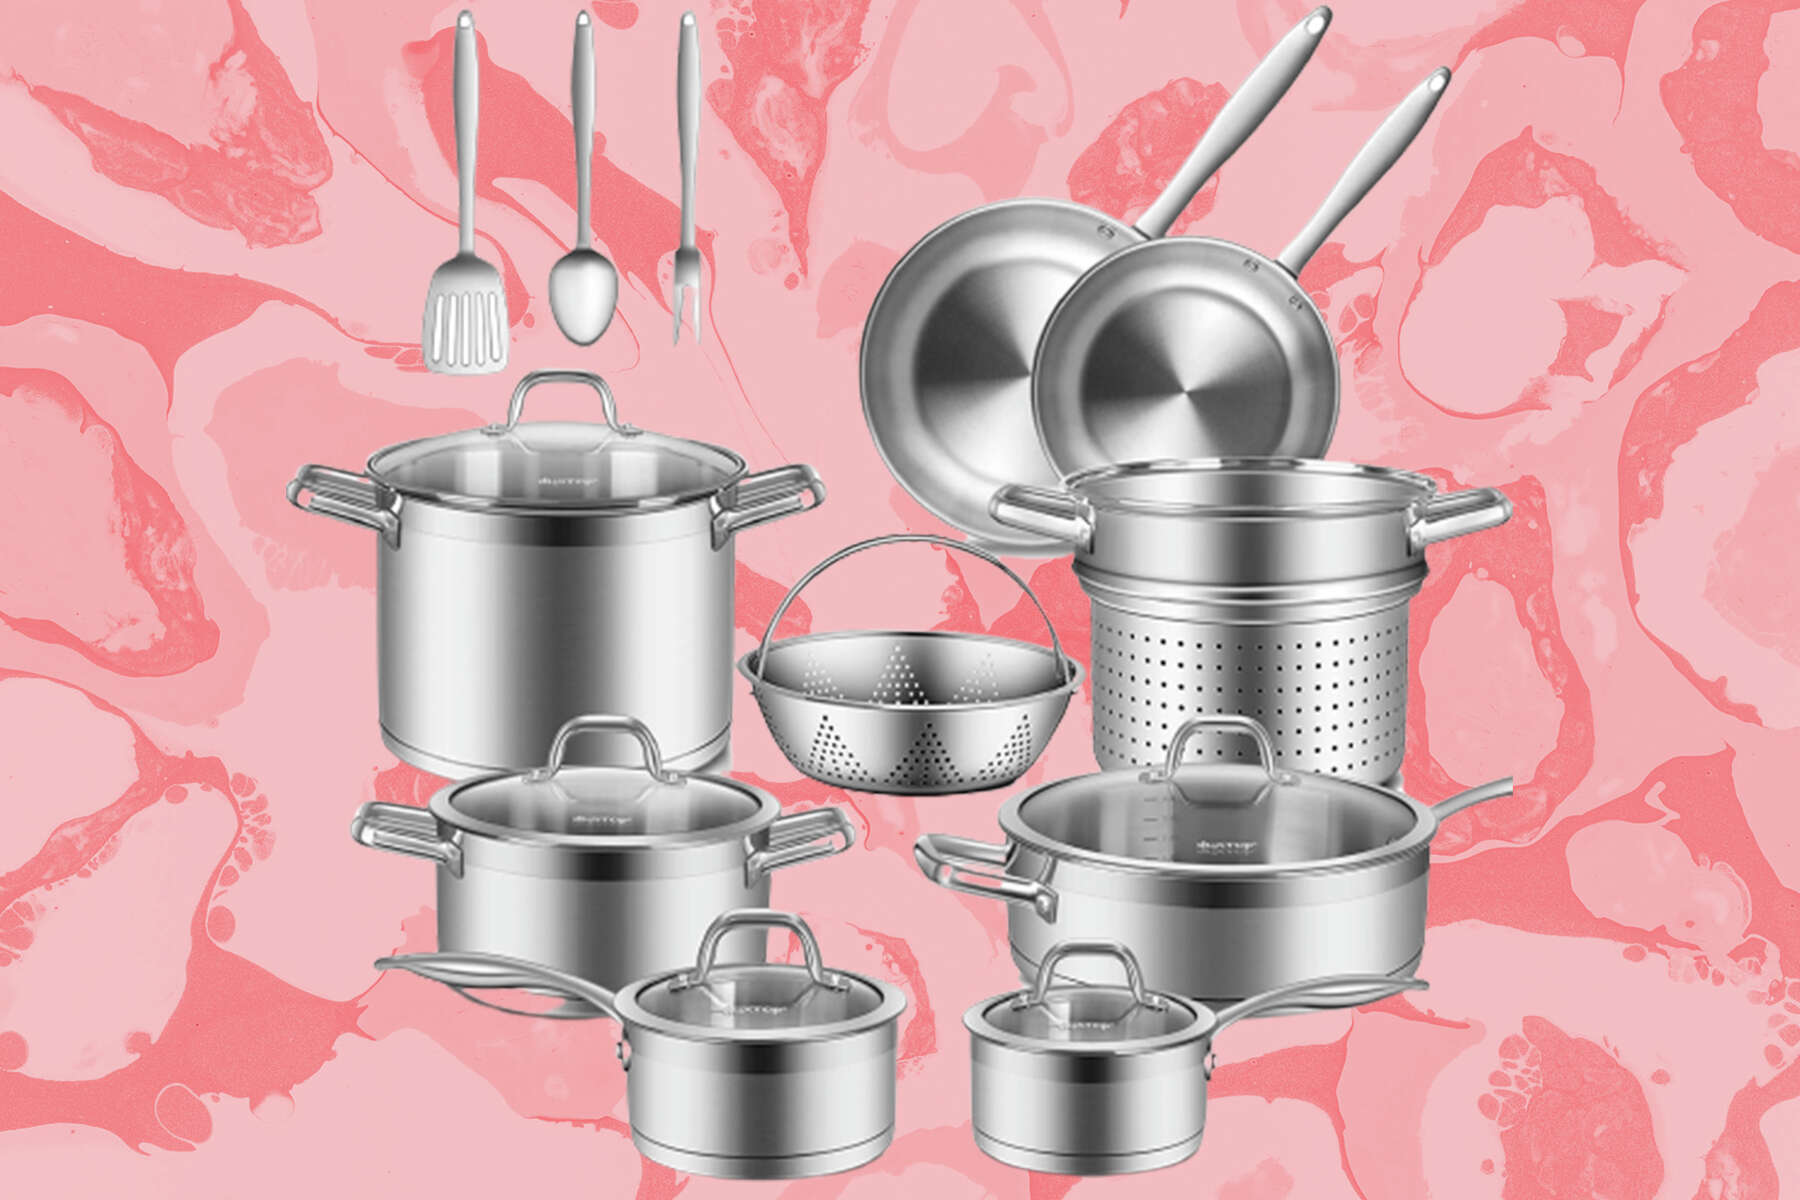 Duxtop Professional Stainless Steel Cookware, 17-Piece Set